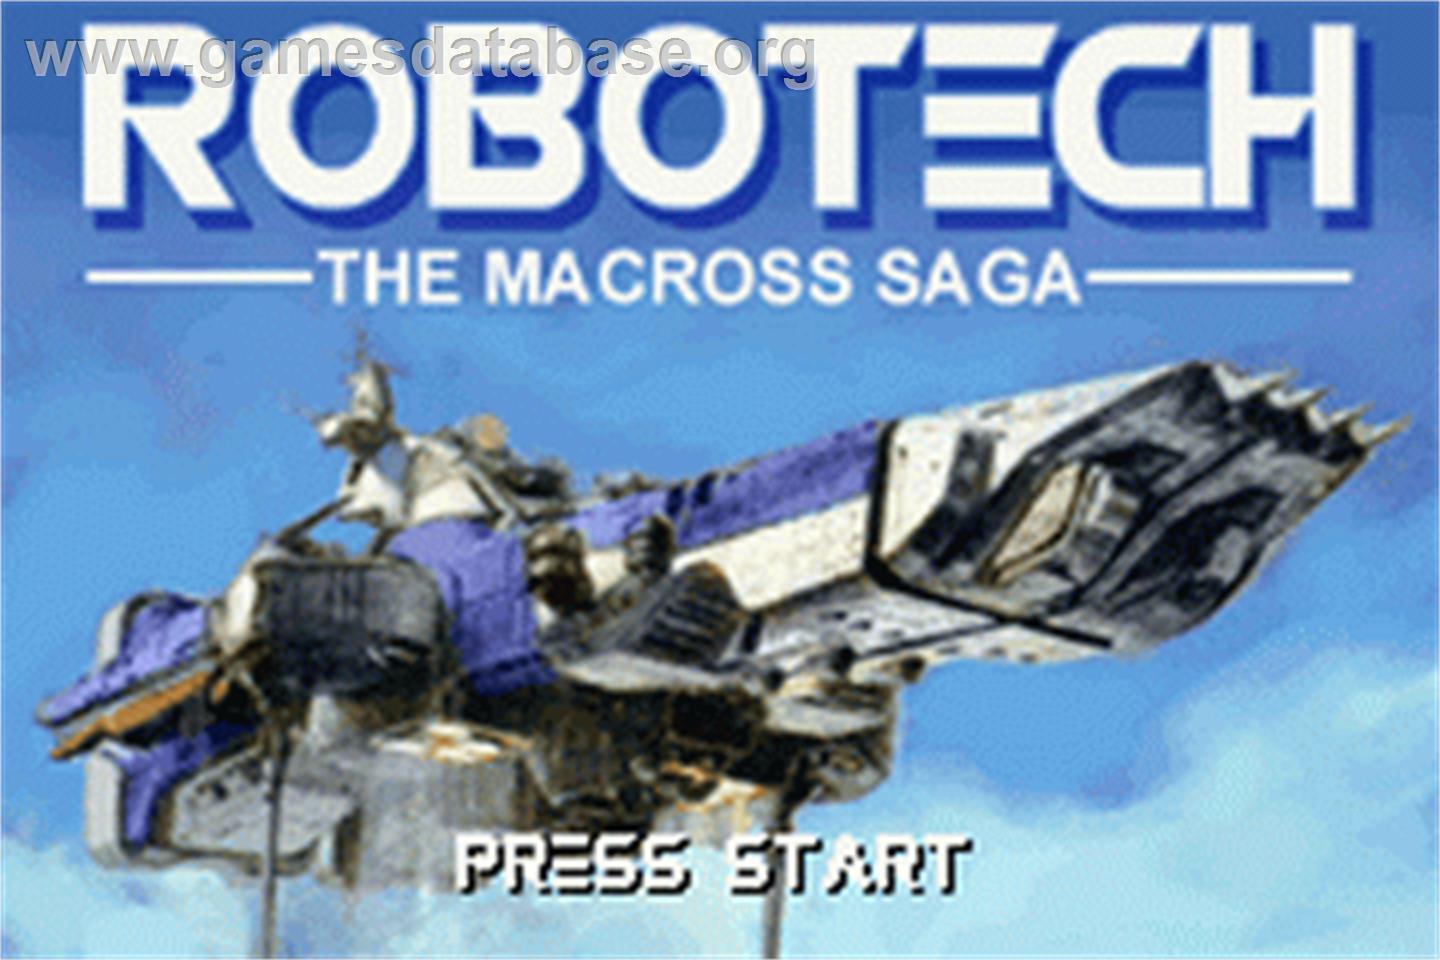 Robotech: The Macross Saga - Nintendo Game Boy Advance - Artwork - Title Screen